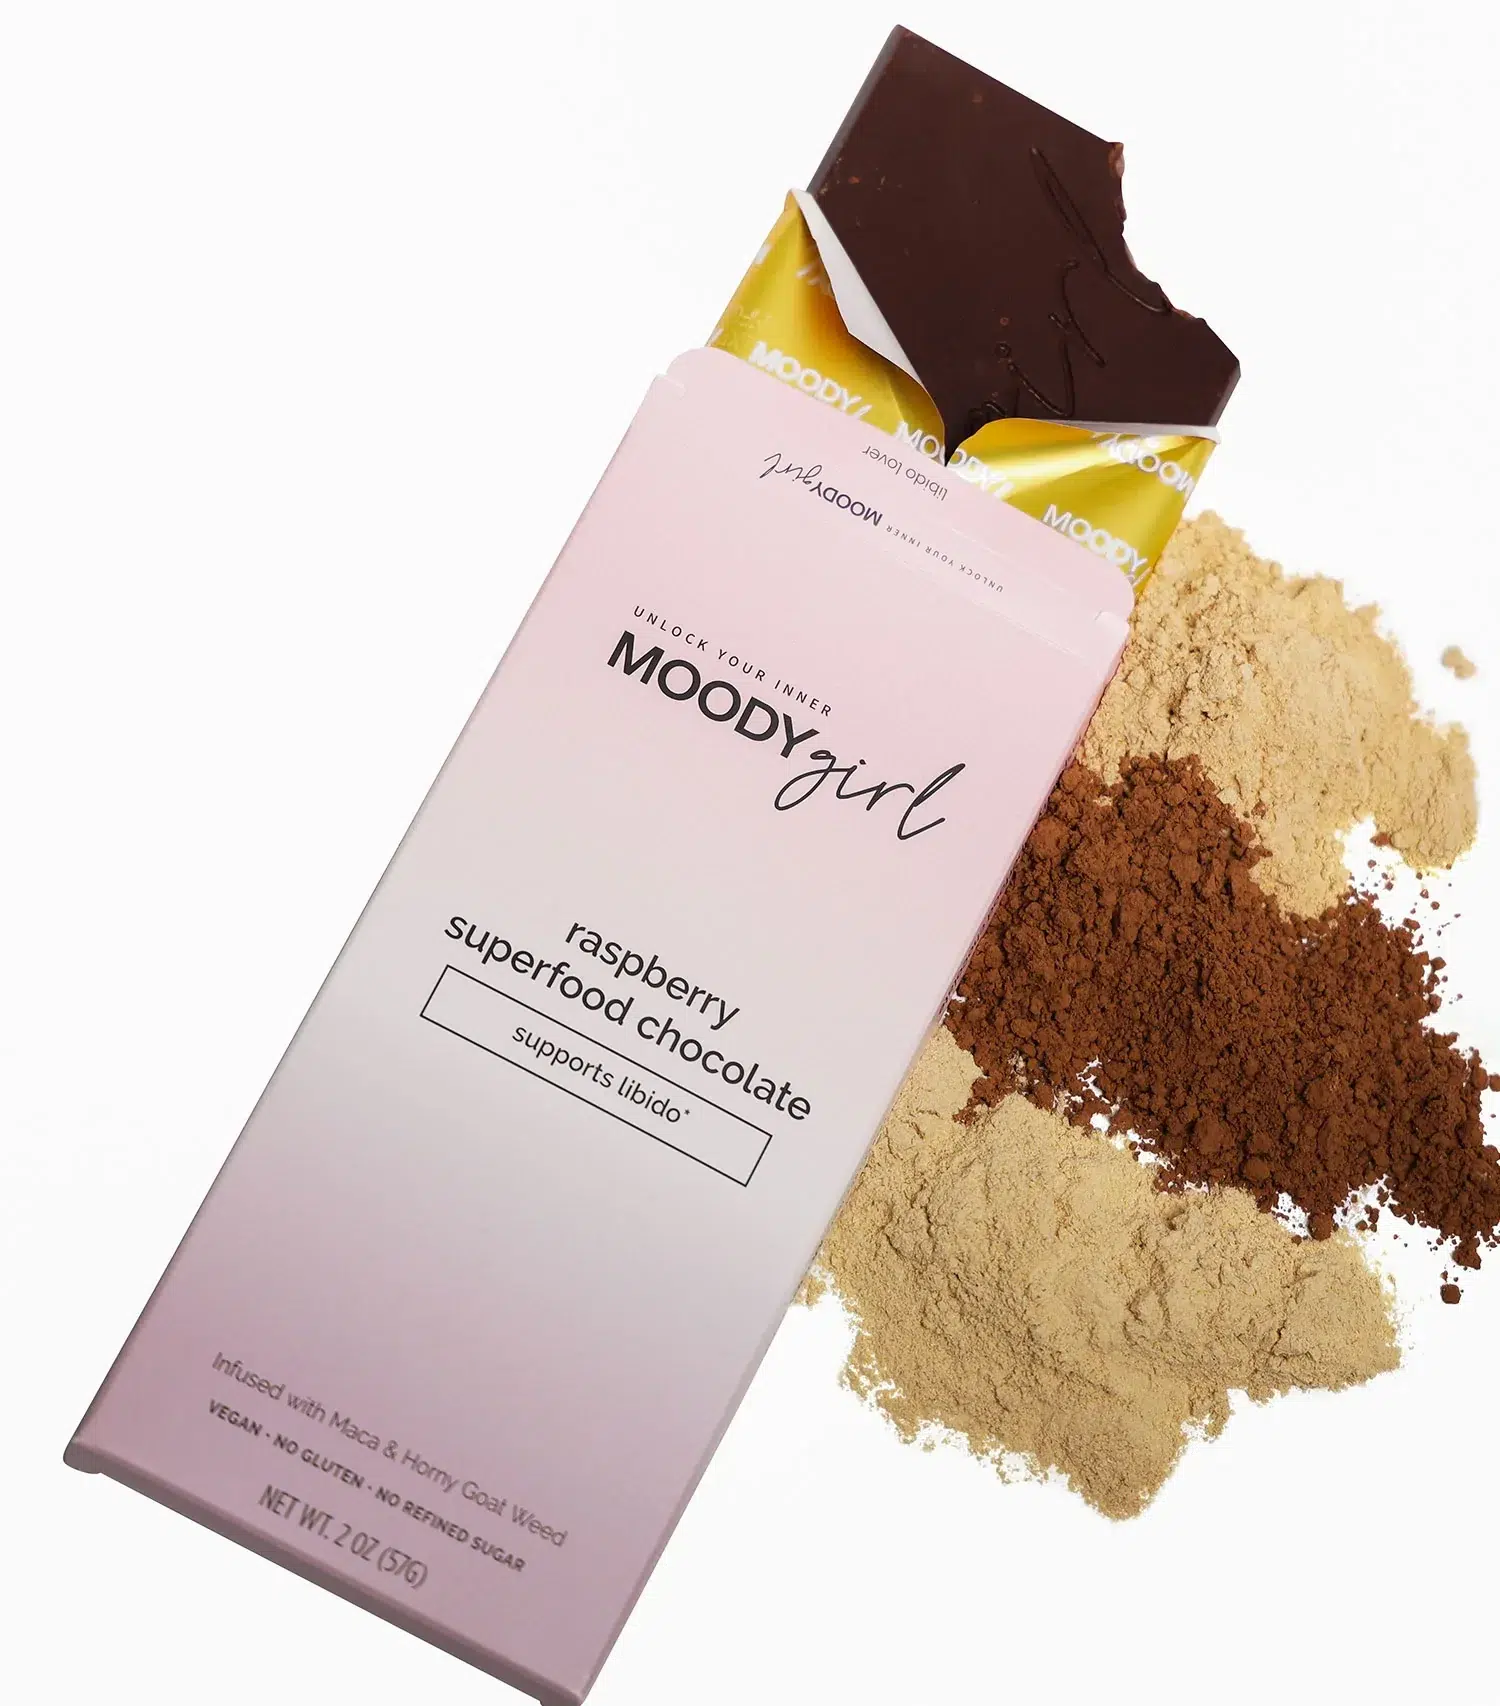 Moodygirl chocolate bar image